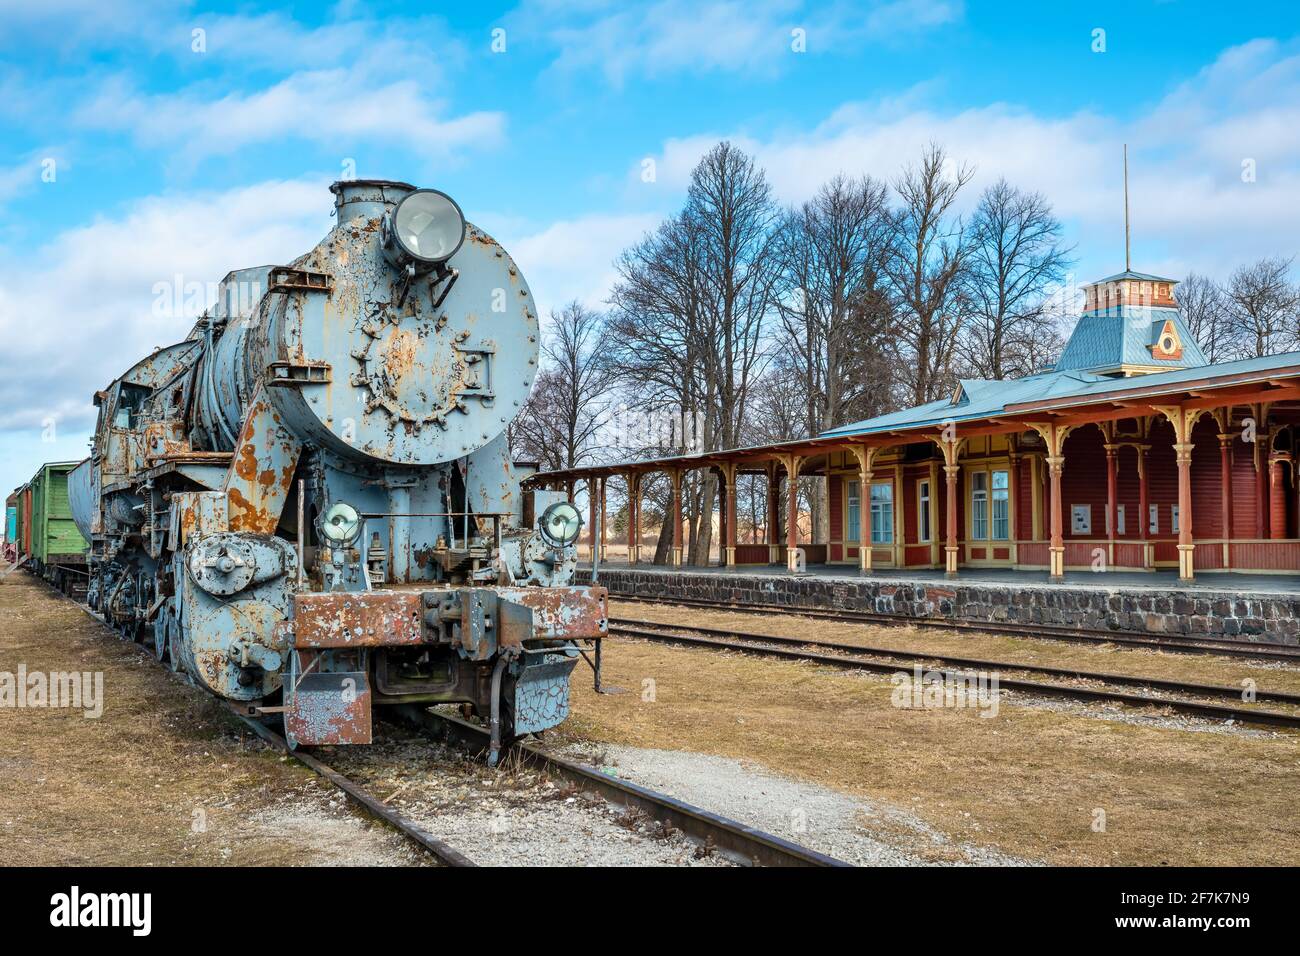 Retro steam locomotive train at old vintage railway station. Haapsalu, Estonia Stock Photo